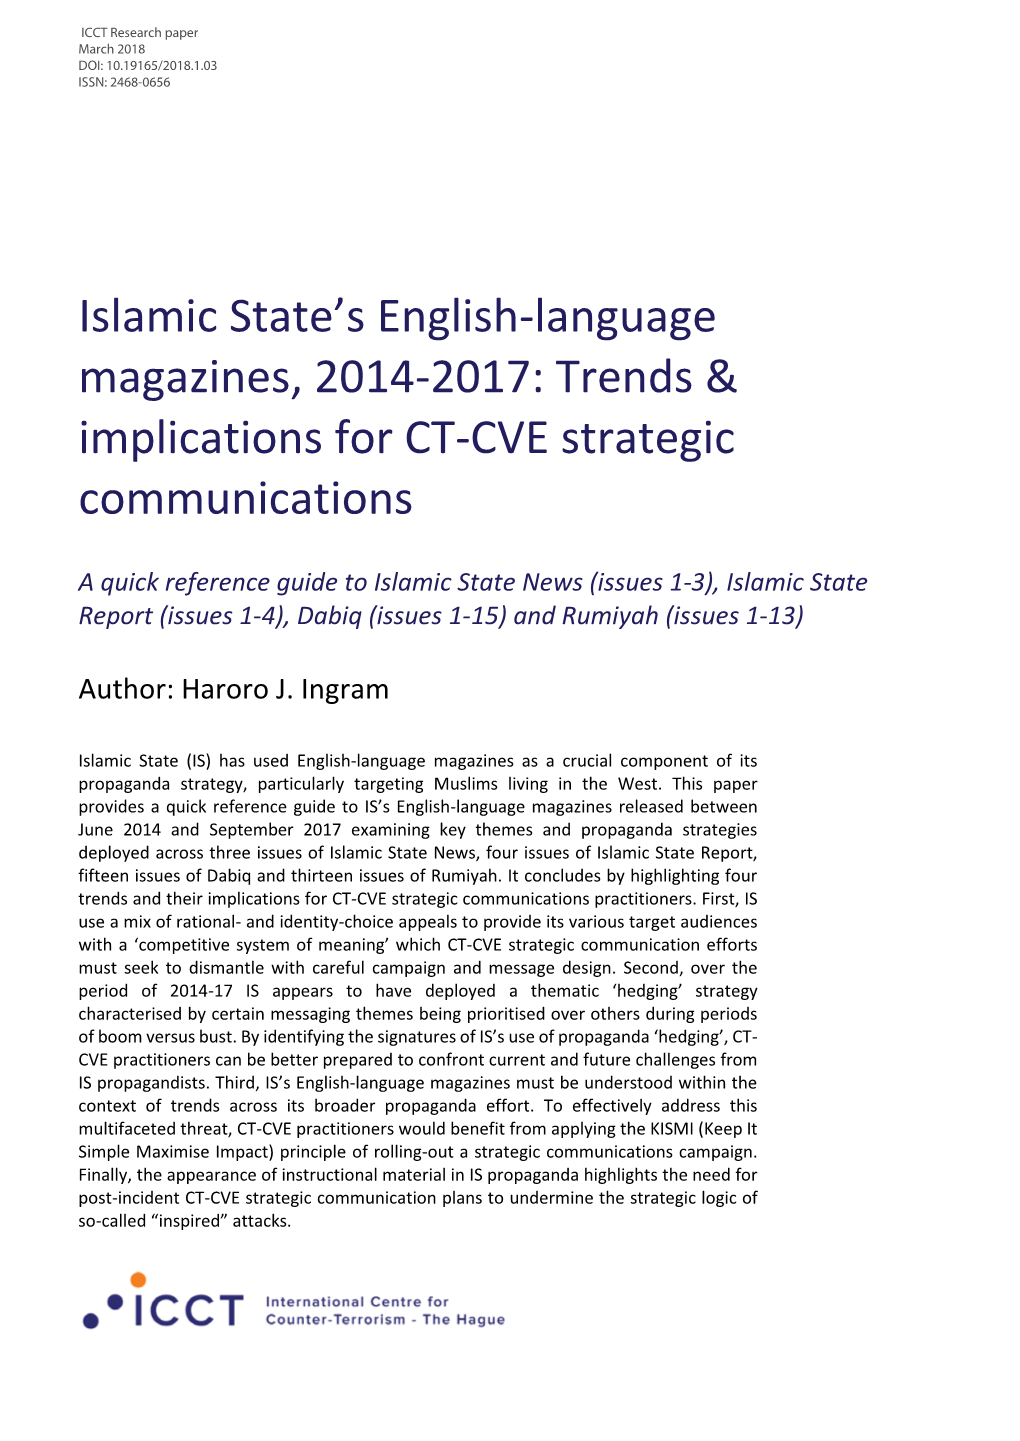 Islamic State's English-Language Magazines, 2014-2017